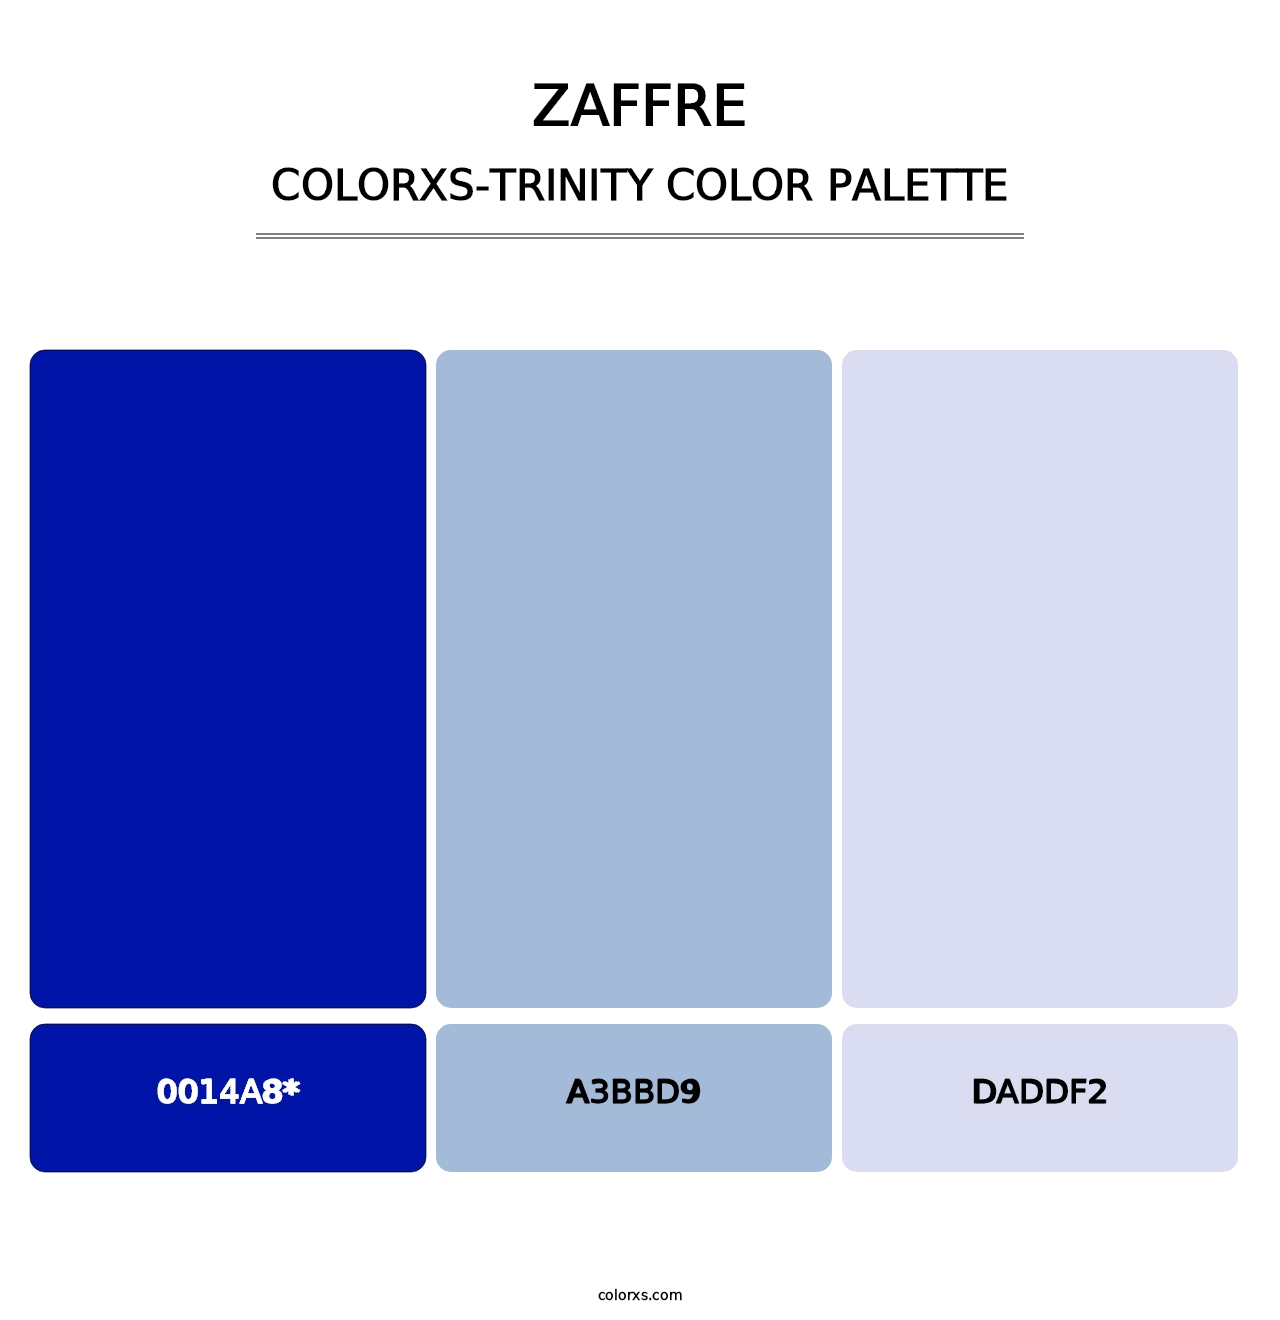 Zaffre - Colorxs Trinity Palette